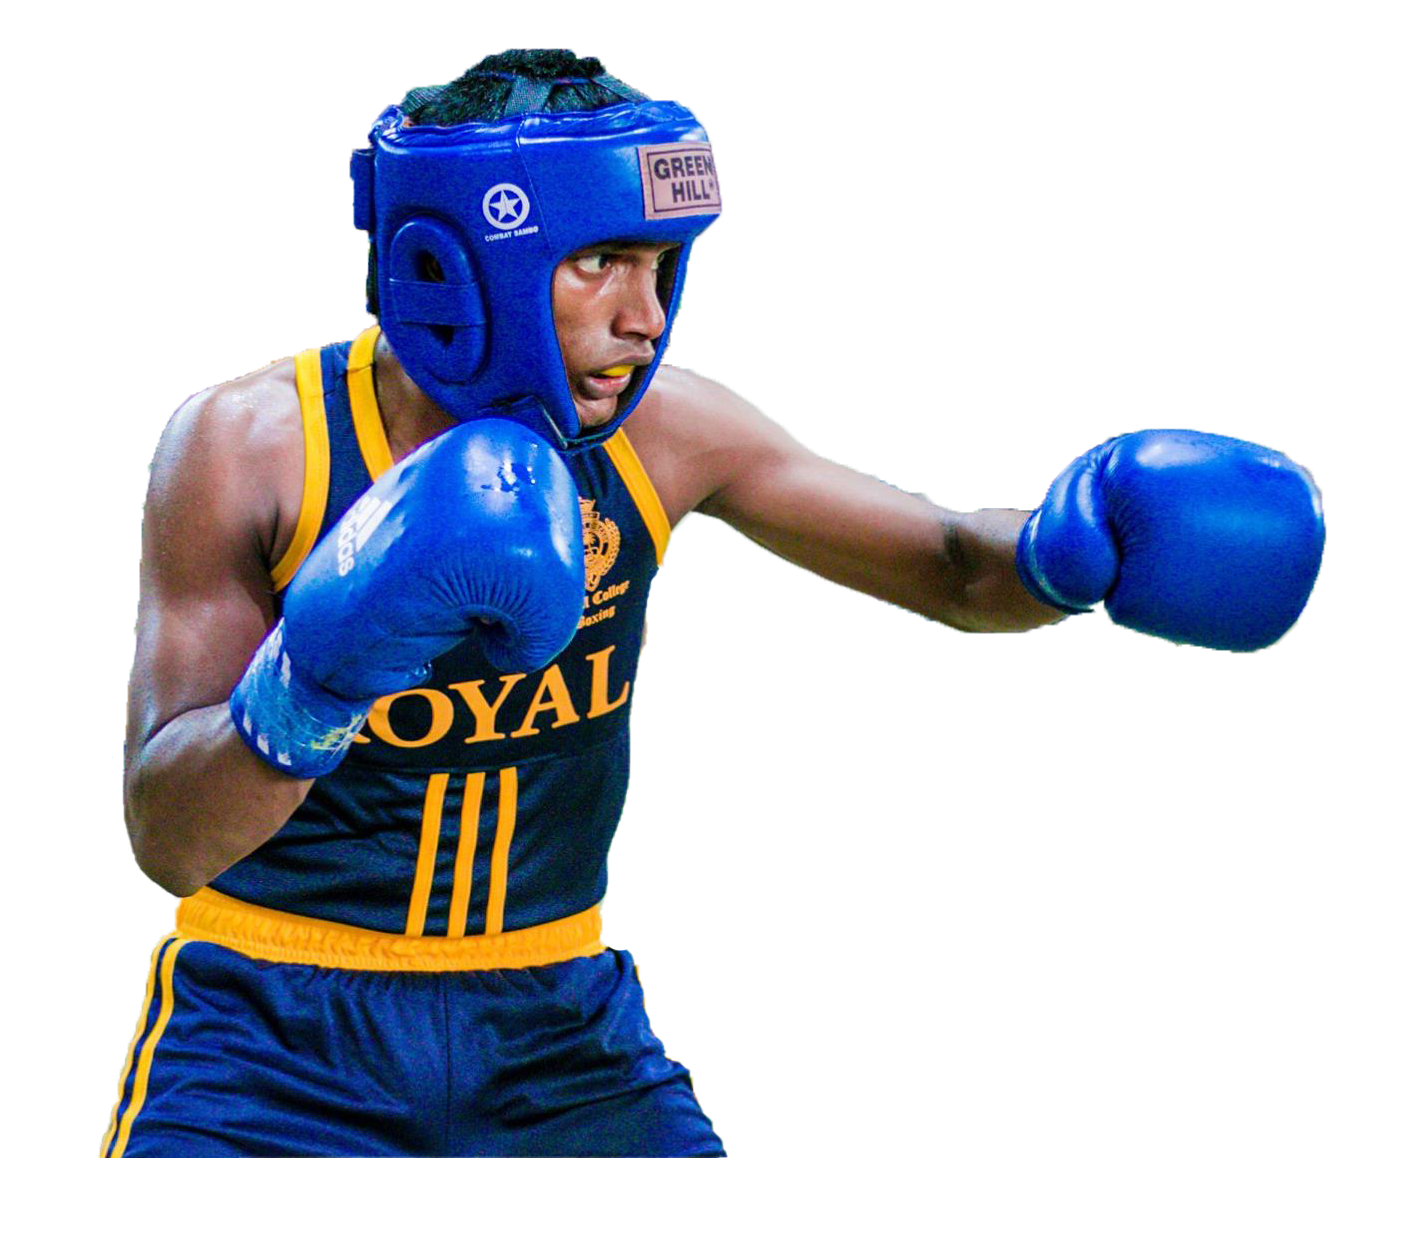 a royal boxer making a punch